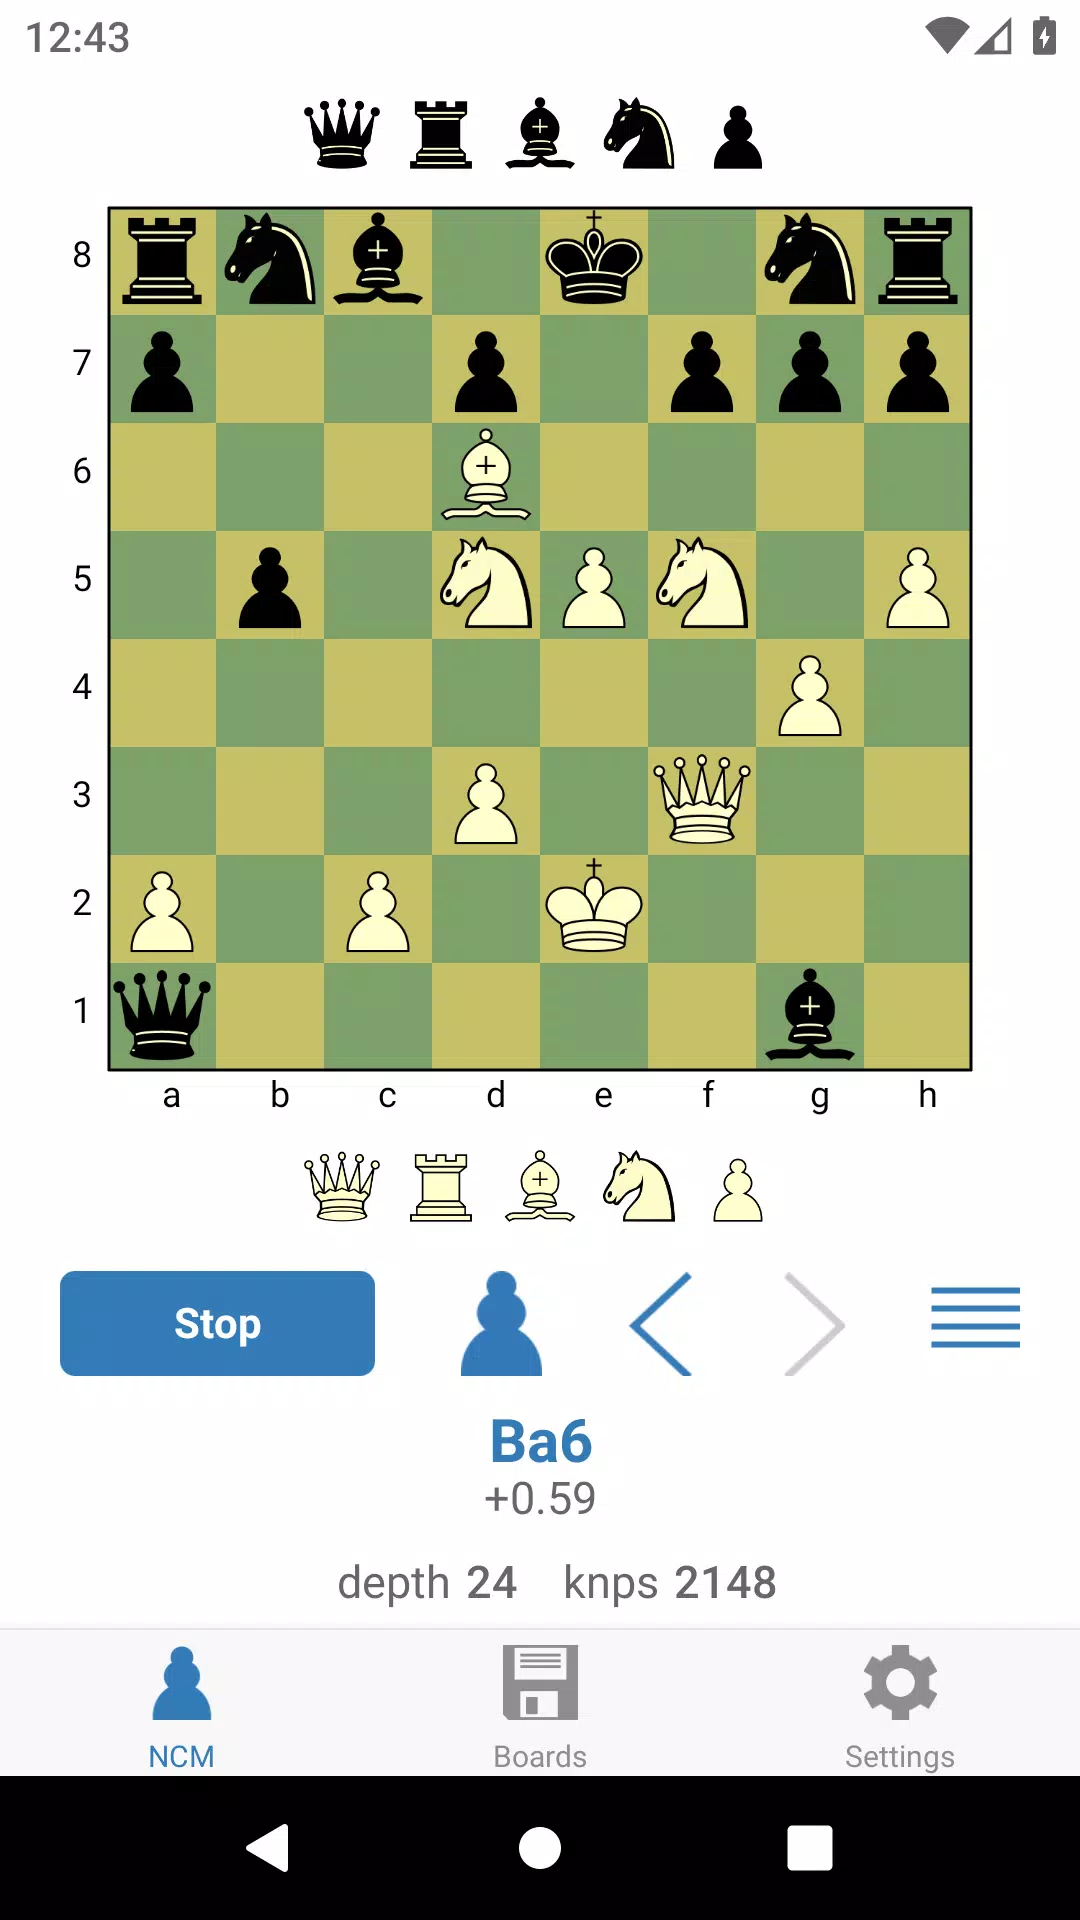 Chess bot - next best move calculator